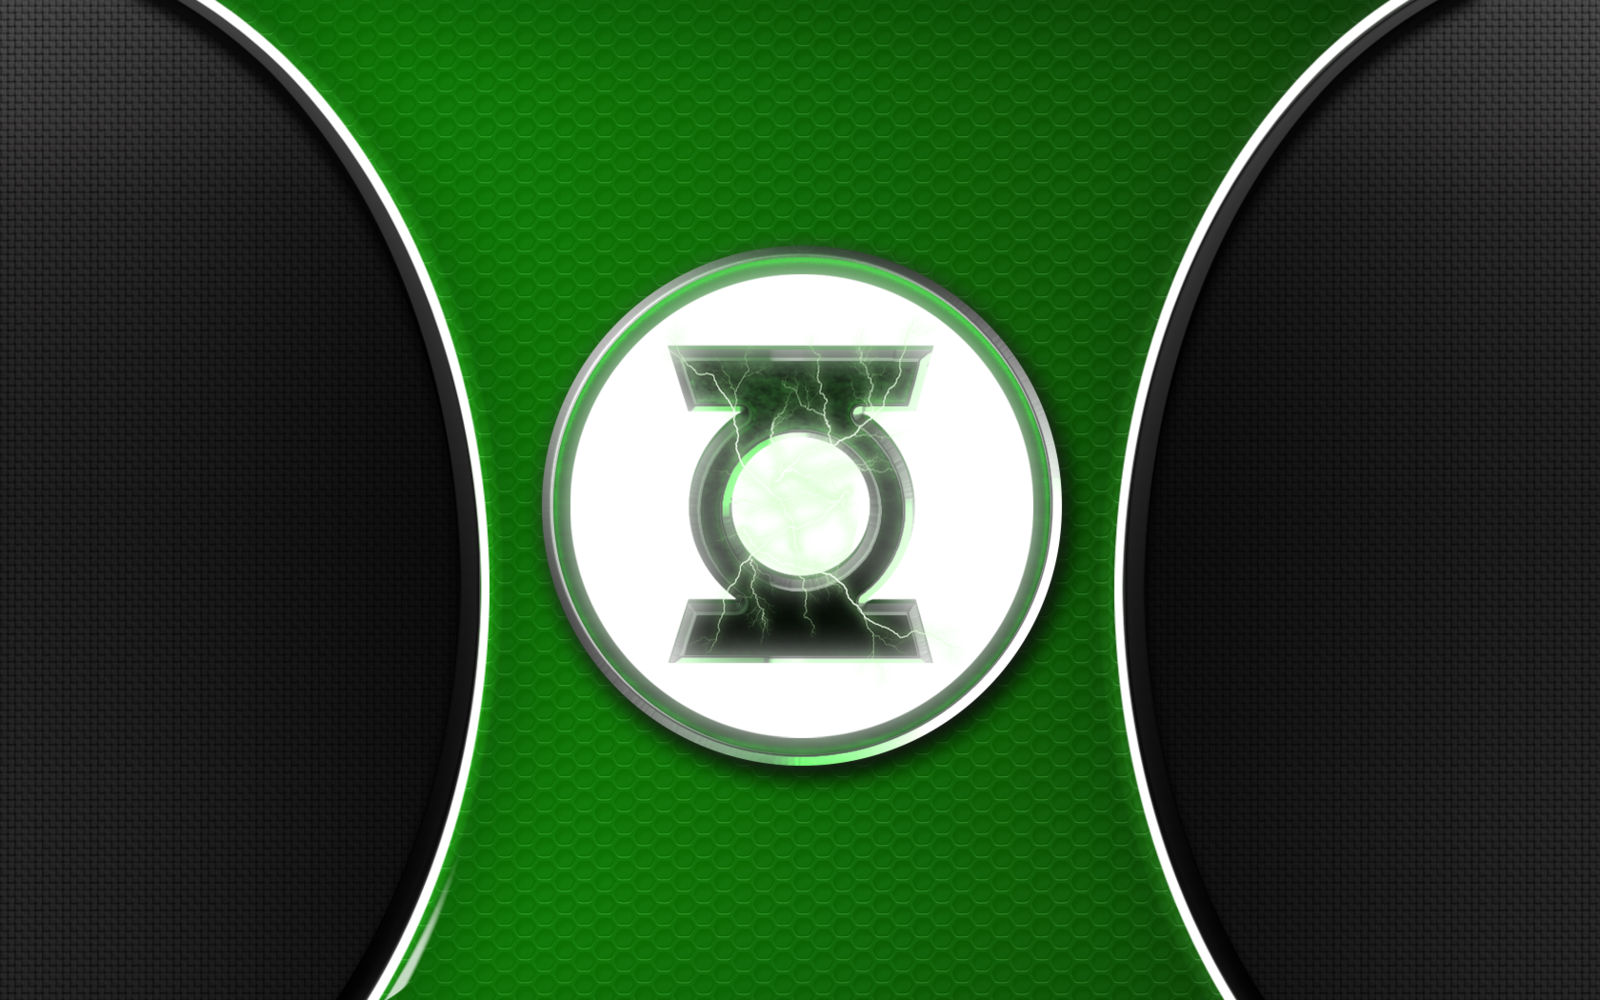 Green Lantern logo Wallpaper High Definition 230   HD Wallpapers Site 1600x1000